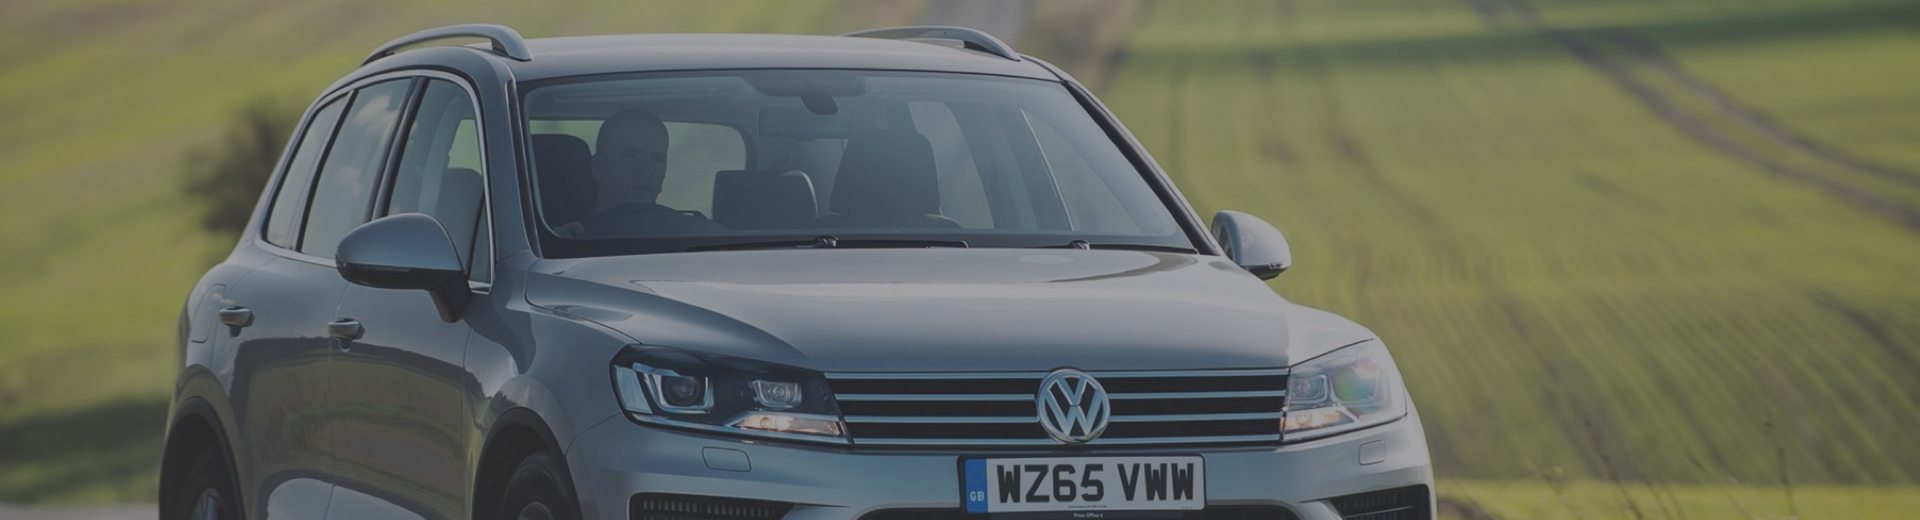 Volkswagen Touareg Lease Deals